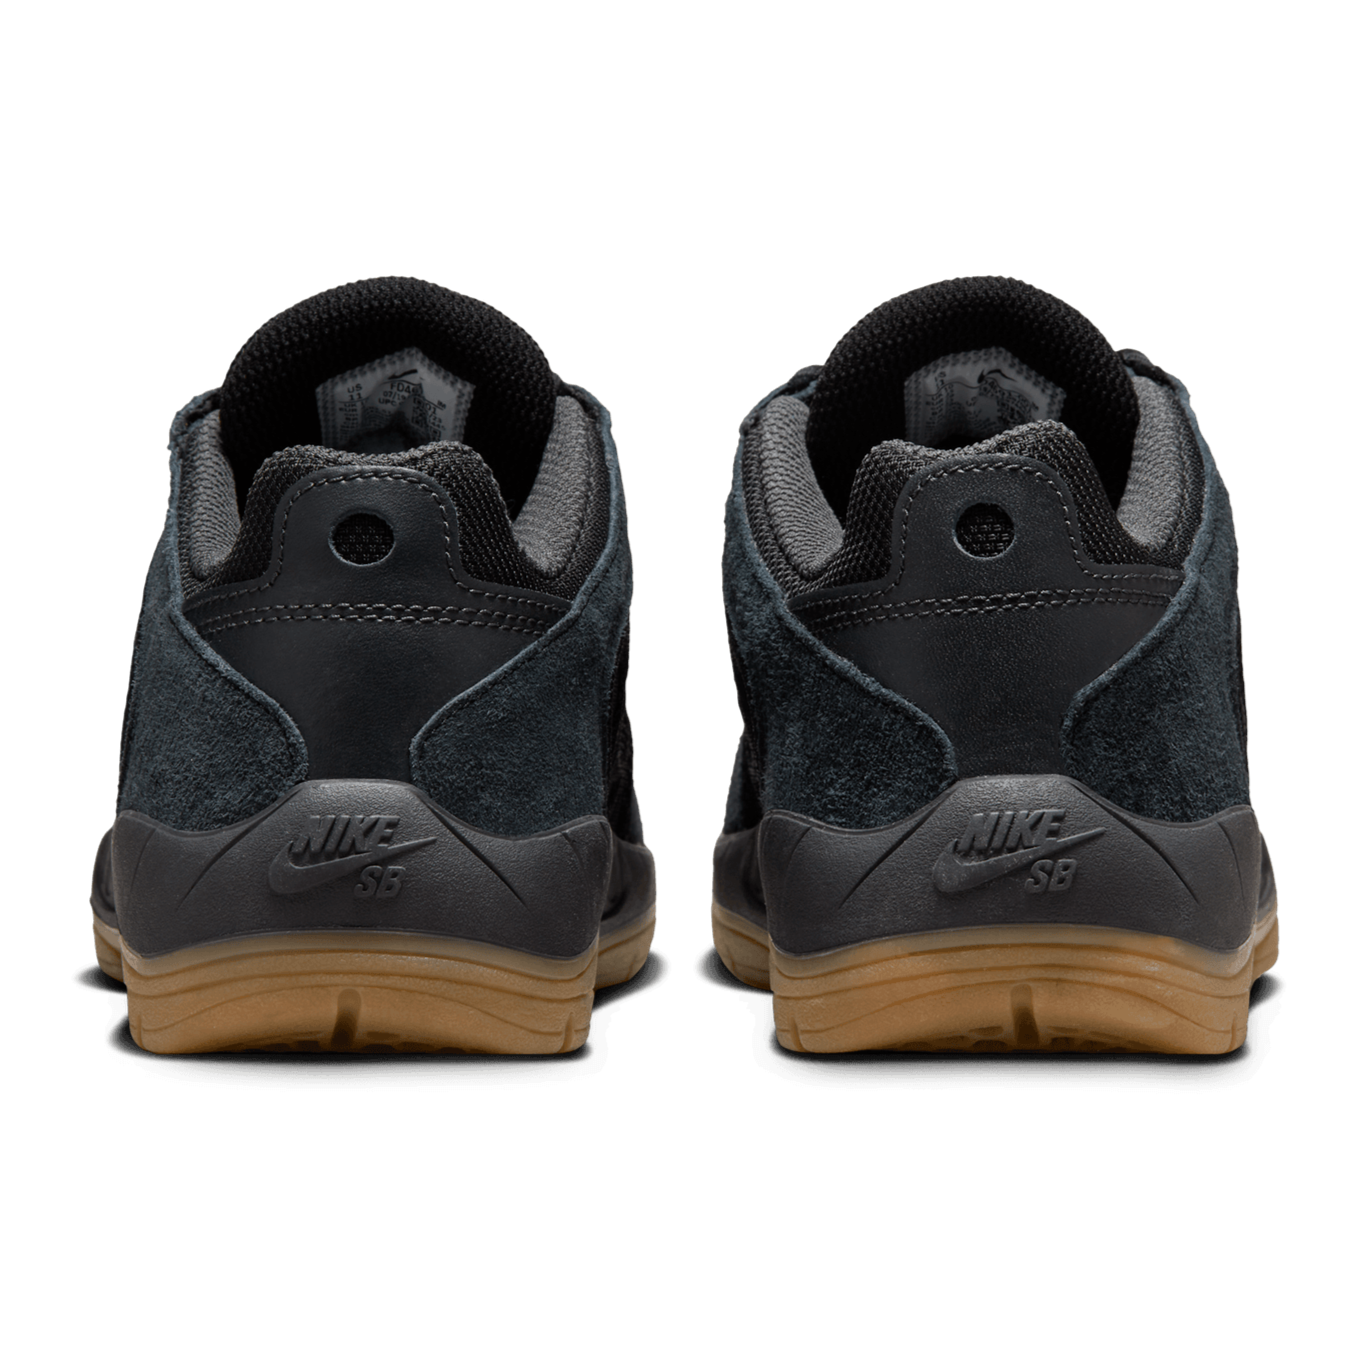 Black/Gum Vertebrae Nike SB Skate Shoe Back